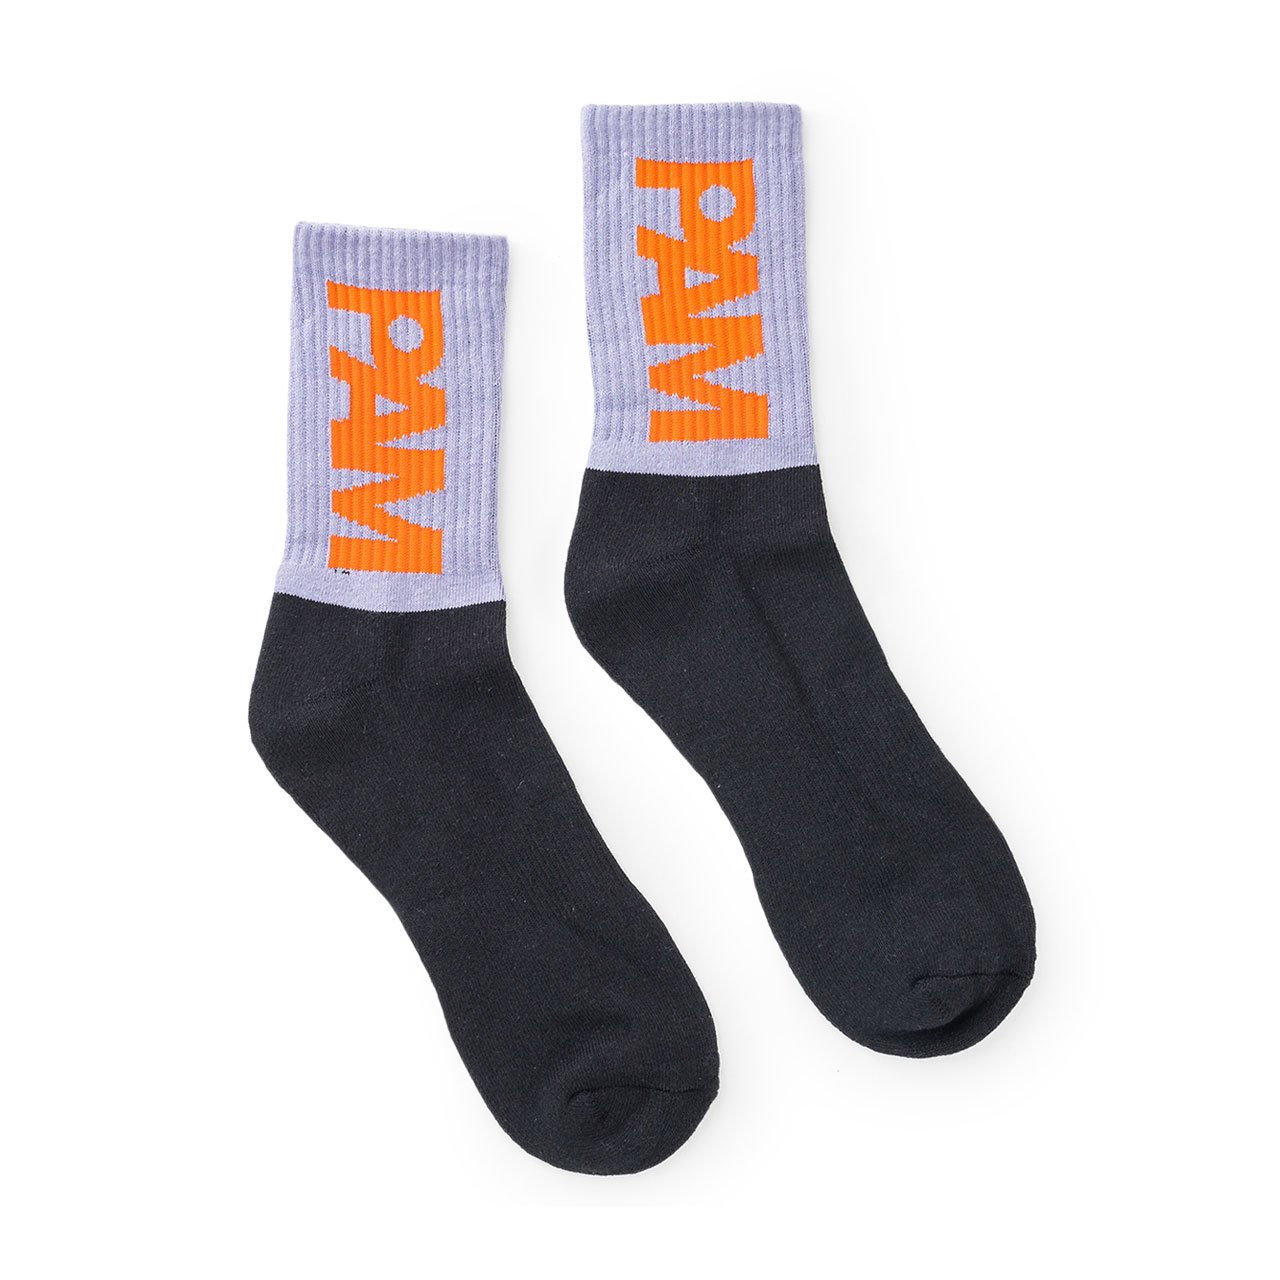 perks and mini dab sport socks (black / lilac) - 9797-b-blli - a.plus - Image - 1